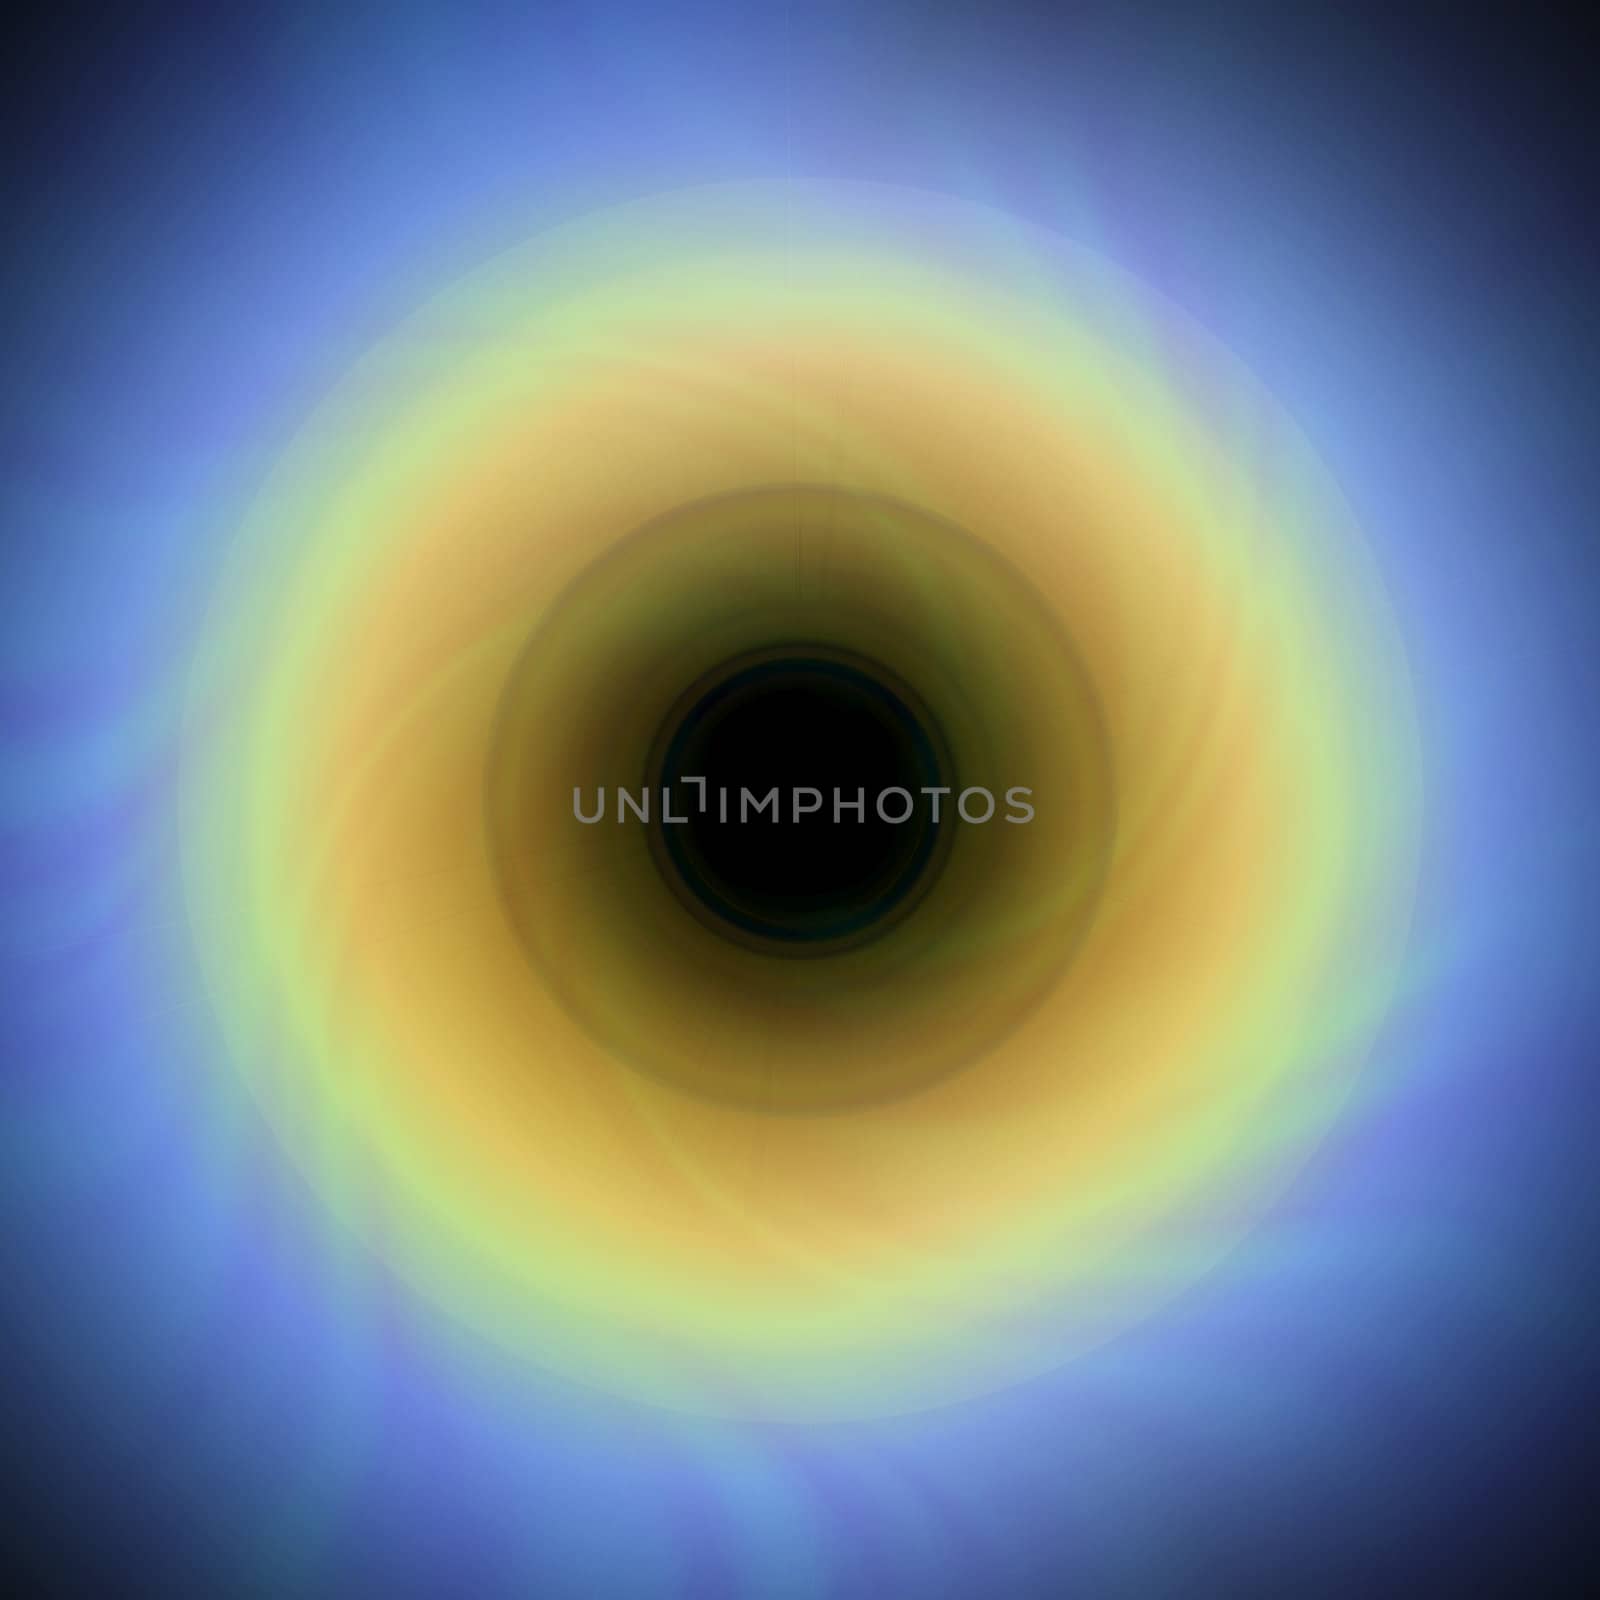 A lens flare background illustration - swirling towards a central vortex.